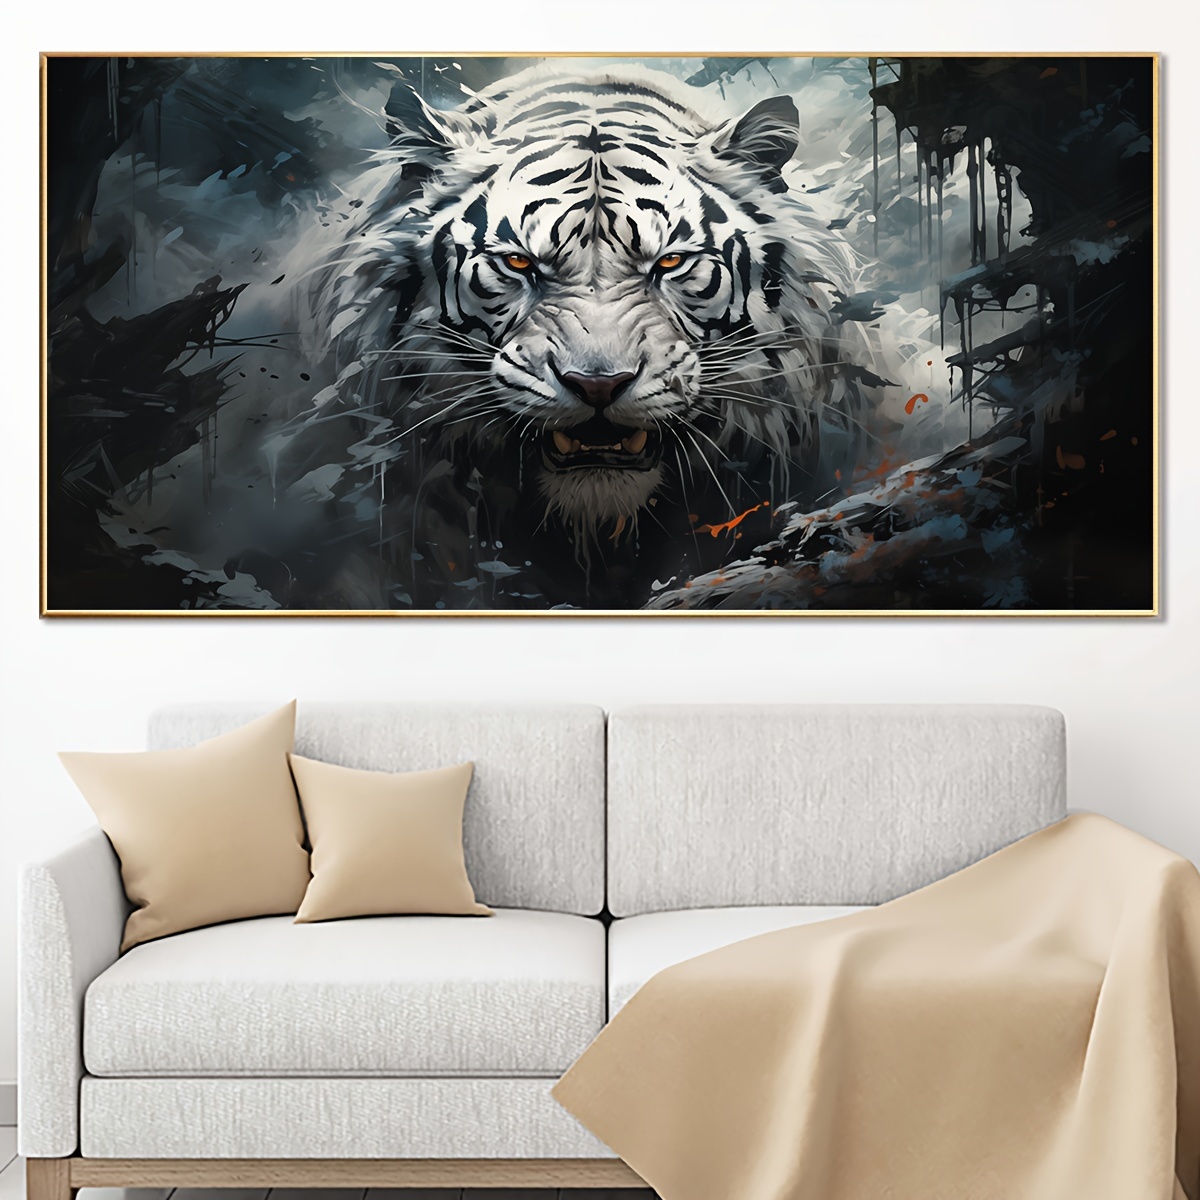 Tiger Canvas Tiger Wall Art Tiger print Tiger wall decor Animal